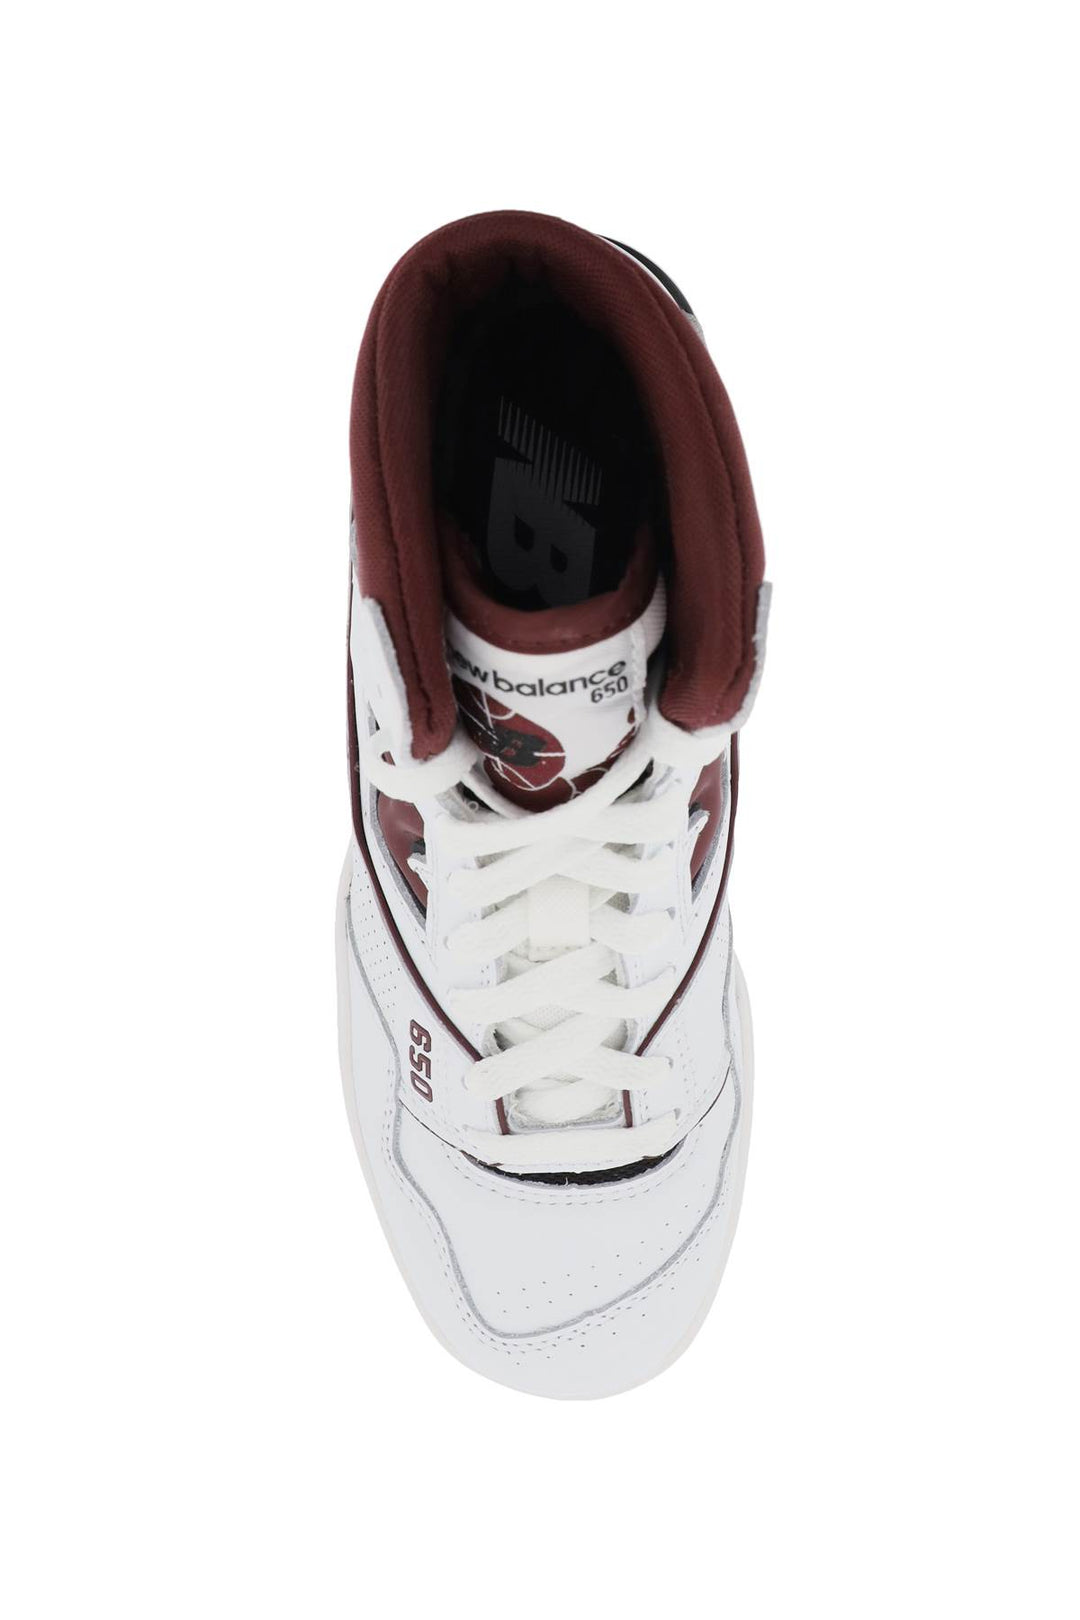 New Balance 650 Sneakers   Bianco